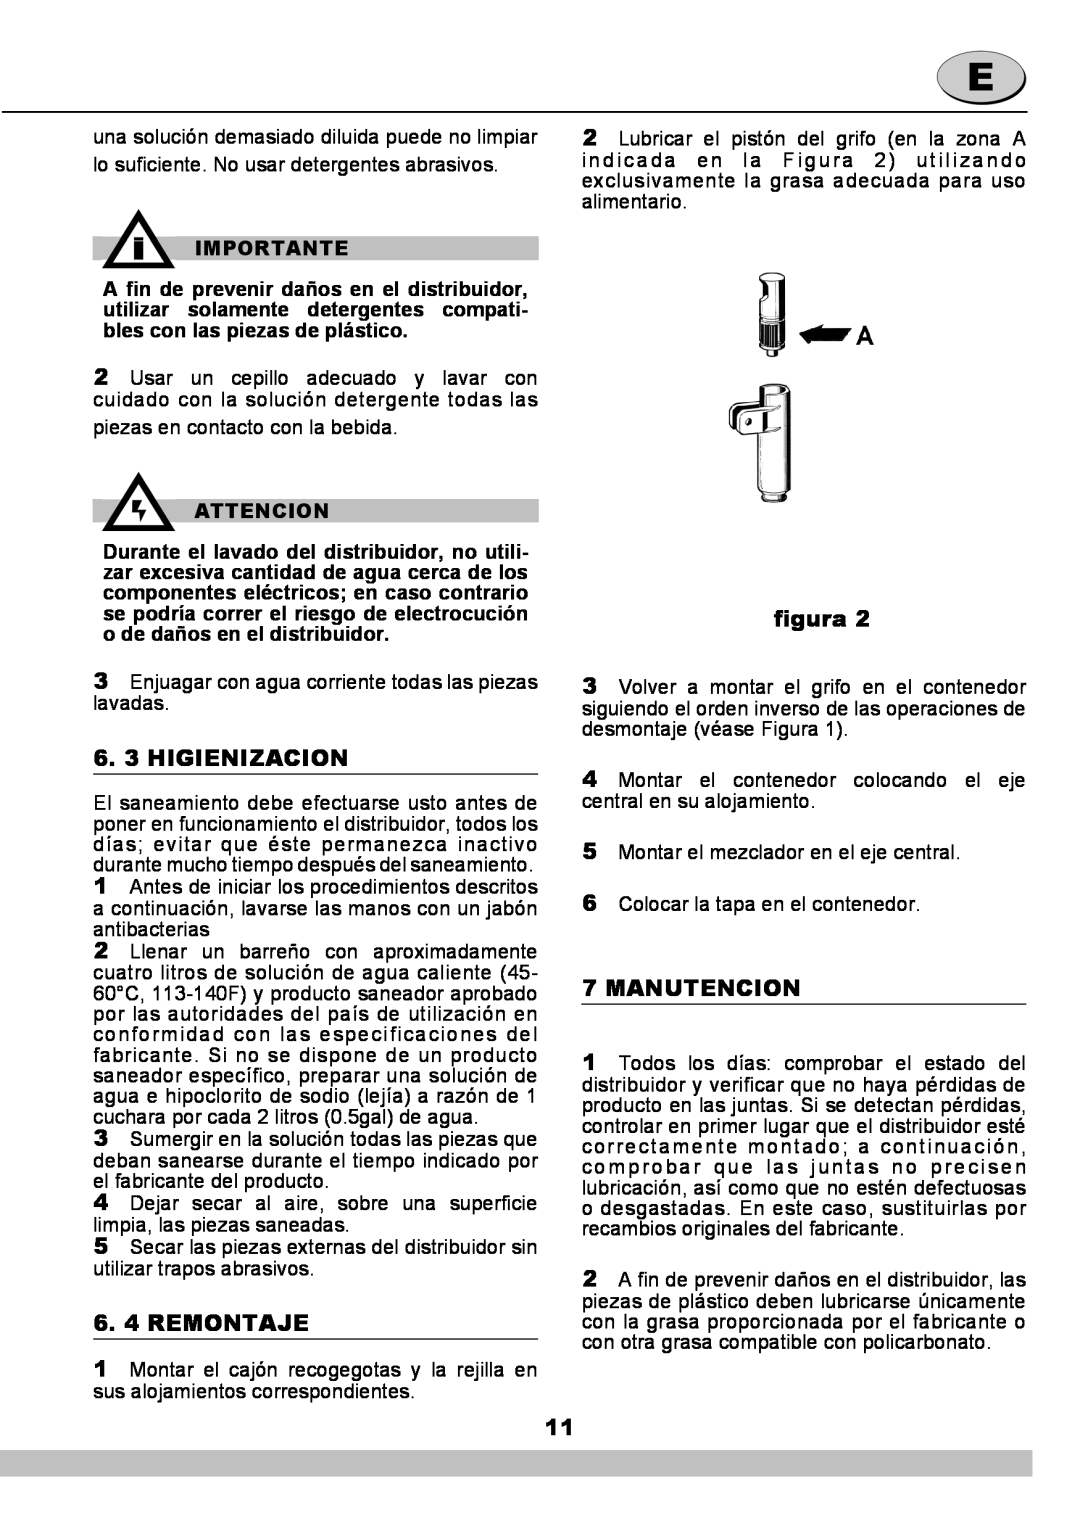 Cecilware NS18A manual 6. 3 HIGIENIZACION, 6. 4 REMONTAJE, 7MANUTENCION, figura, Importante, Attencion 